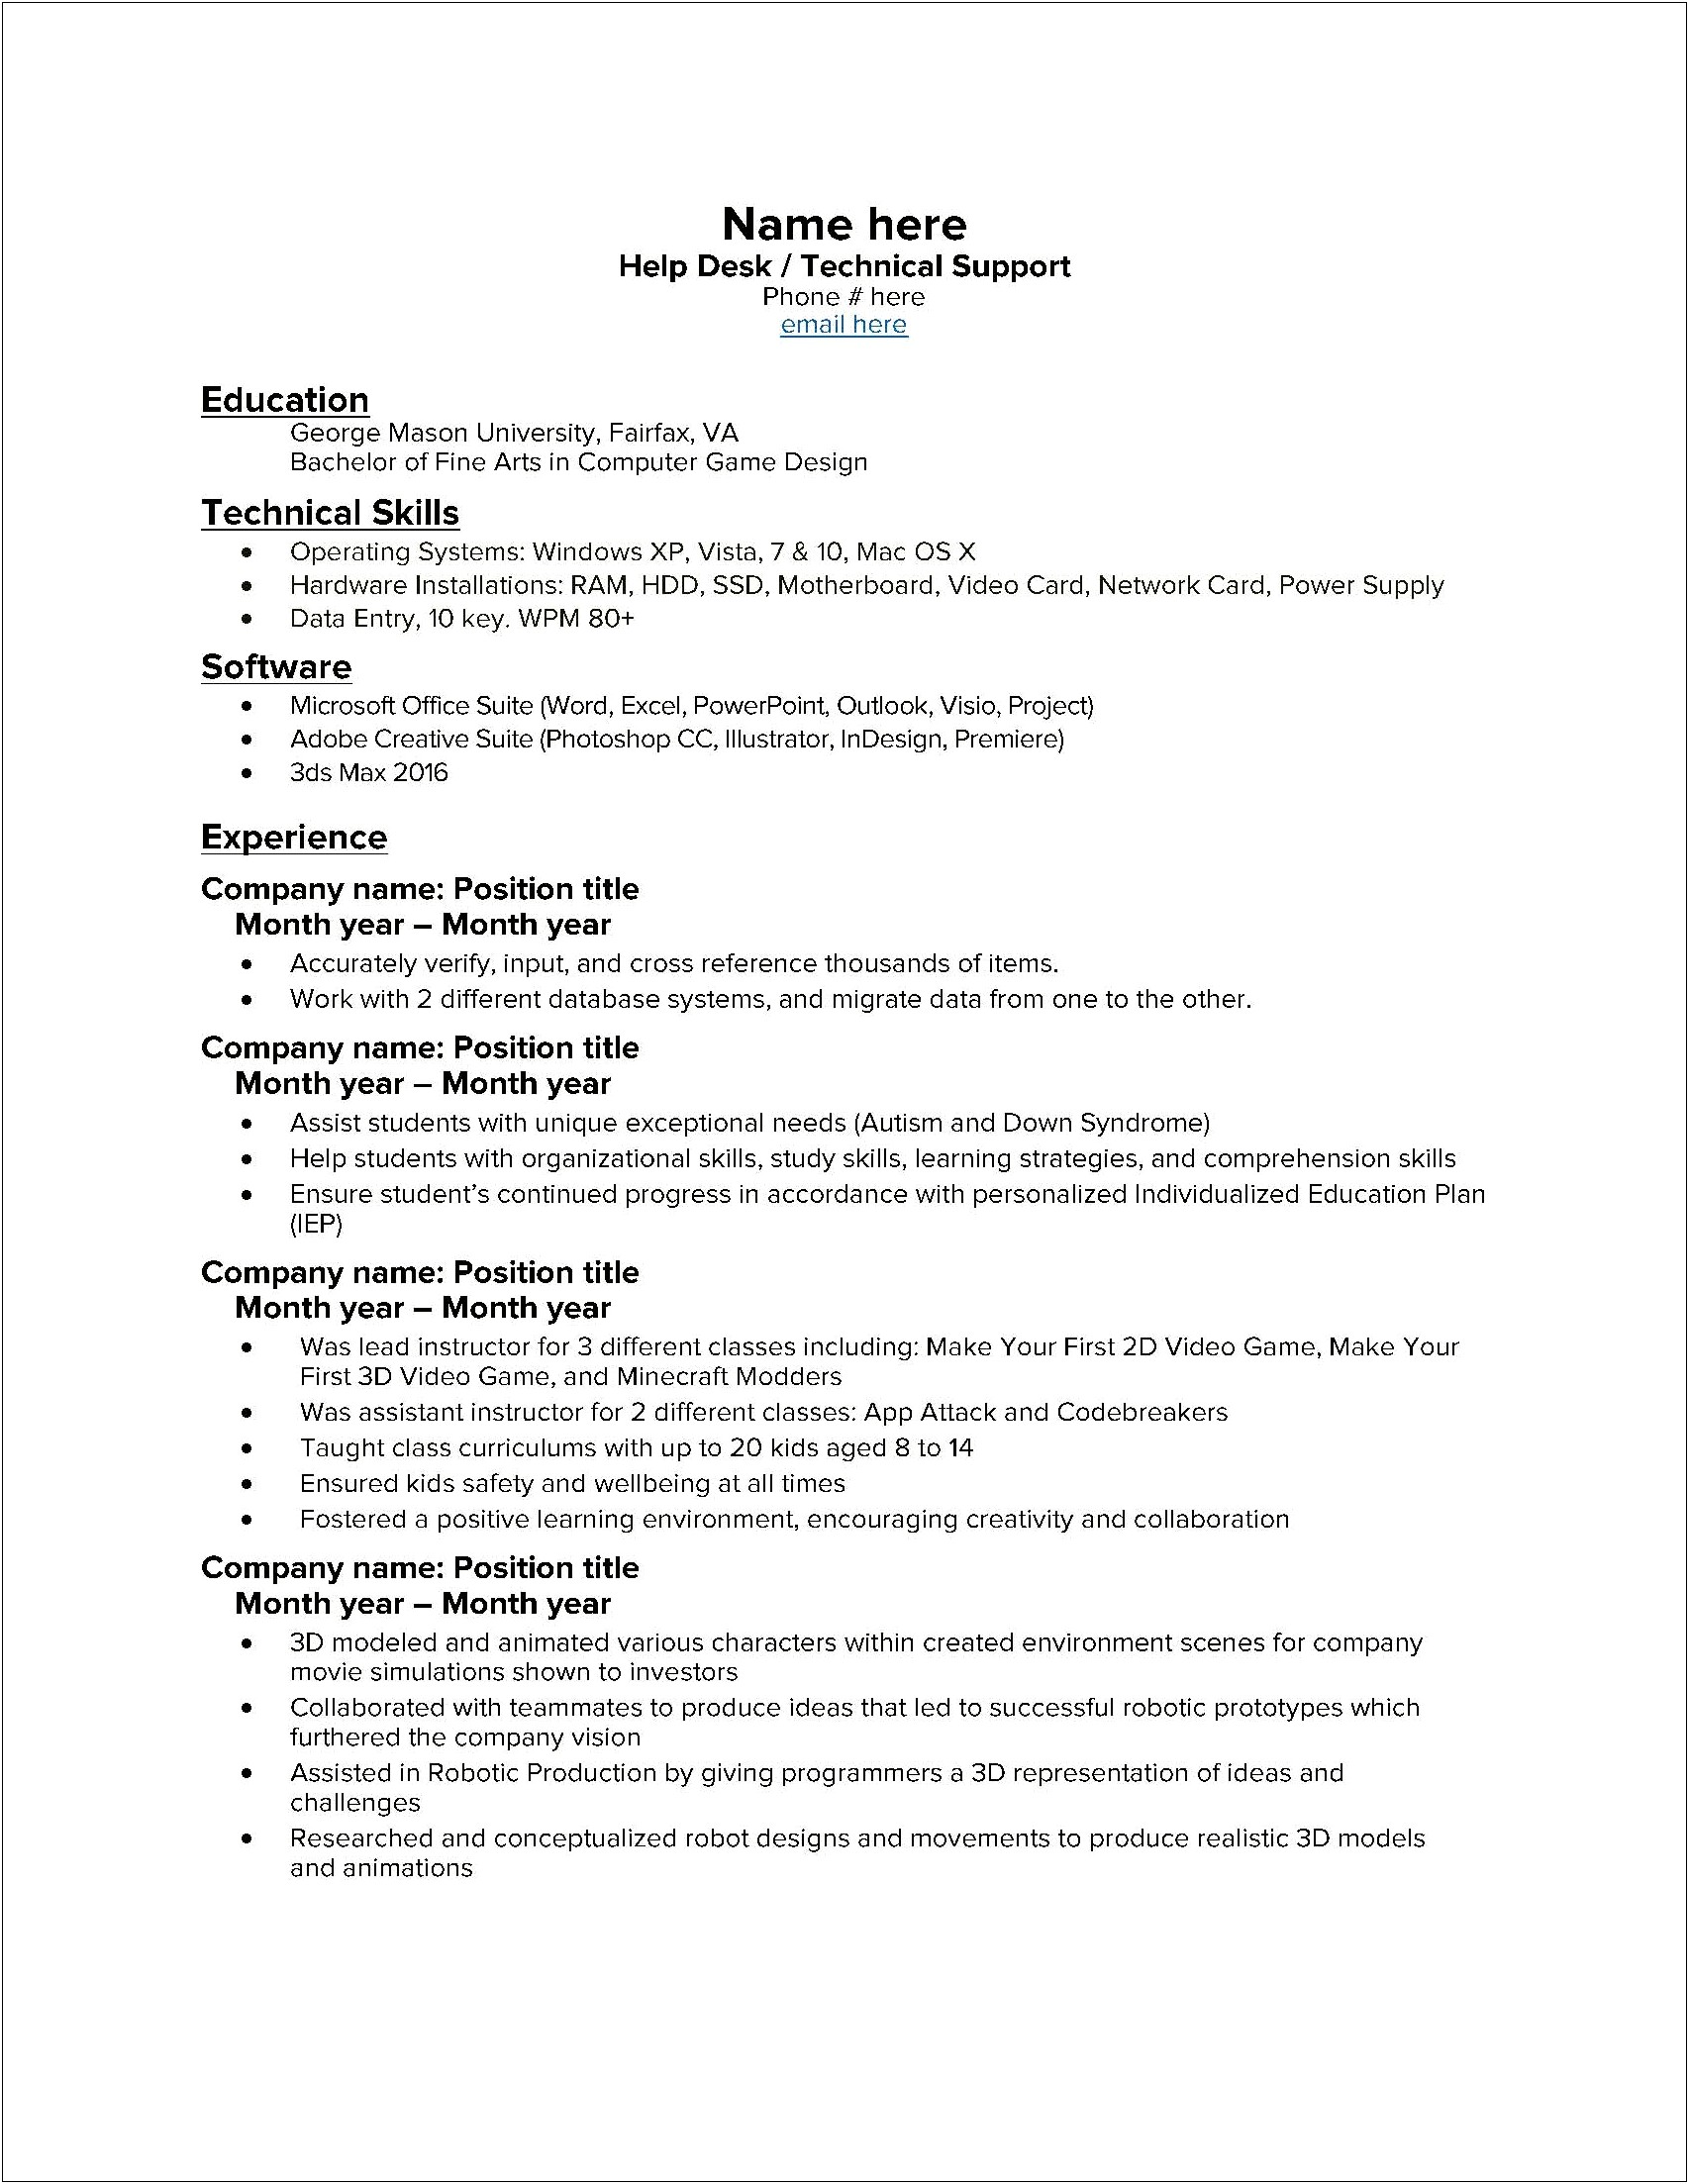 Best Resume Templates Reddit Help Desk